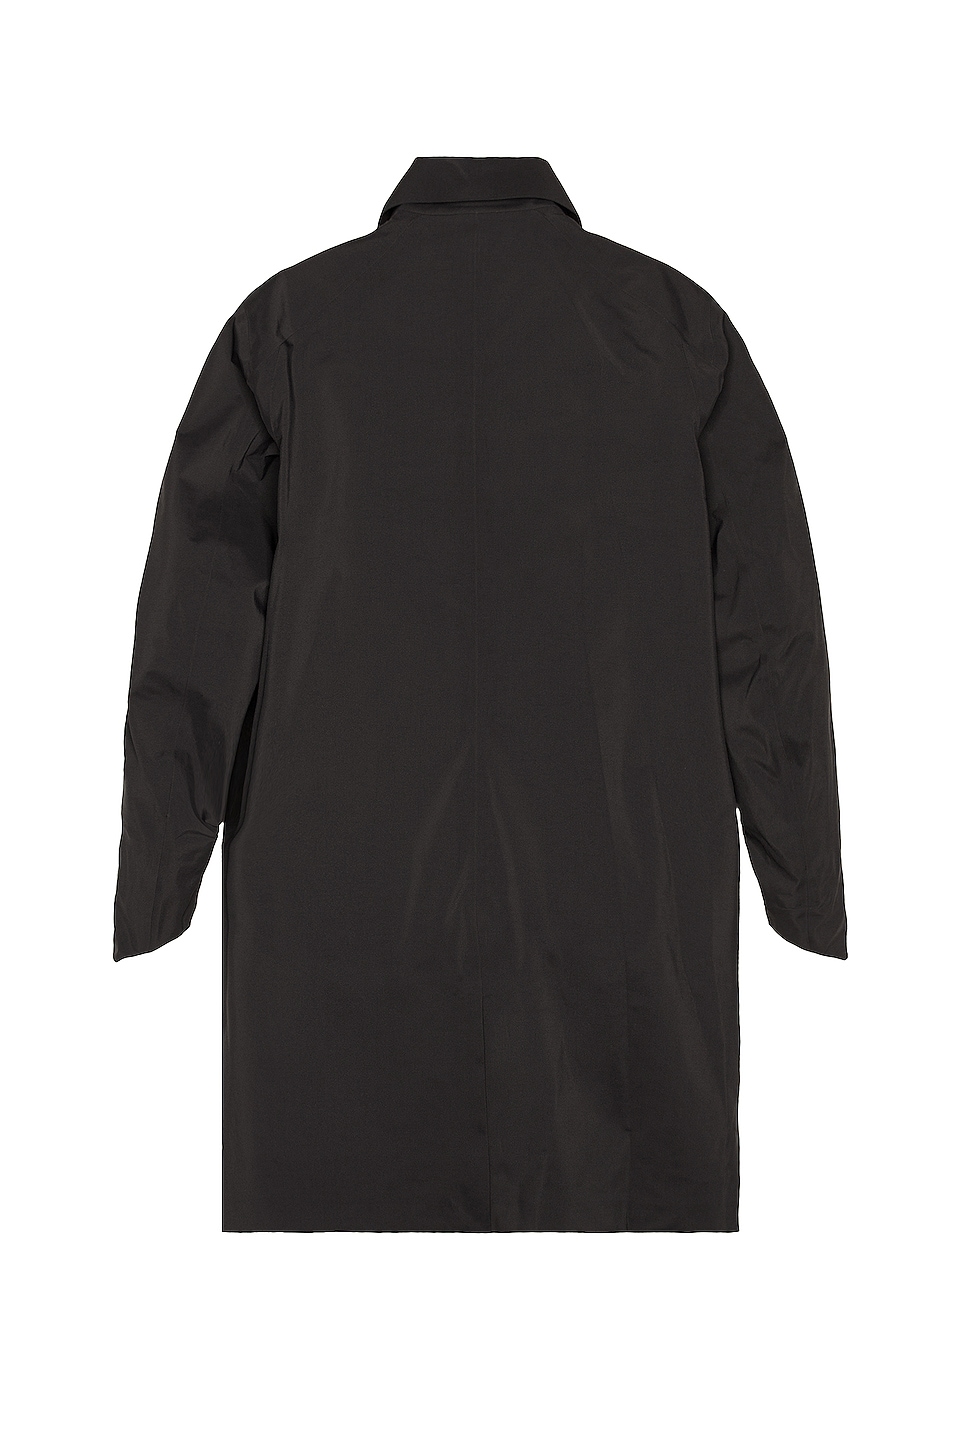 Veilance Partition Coat in Black | REVOLVE